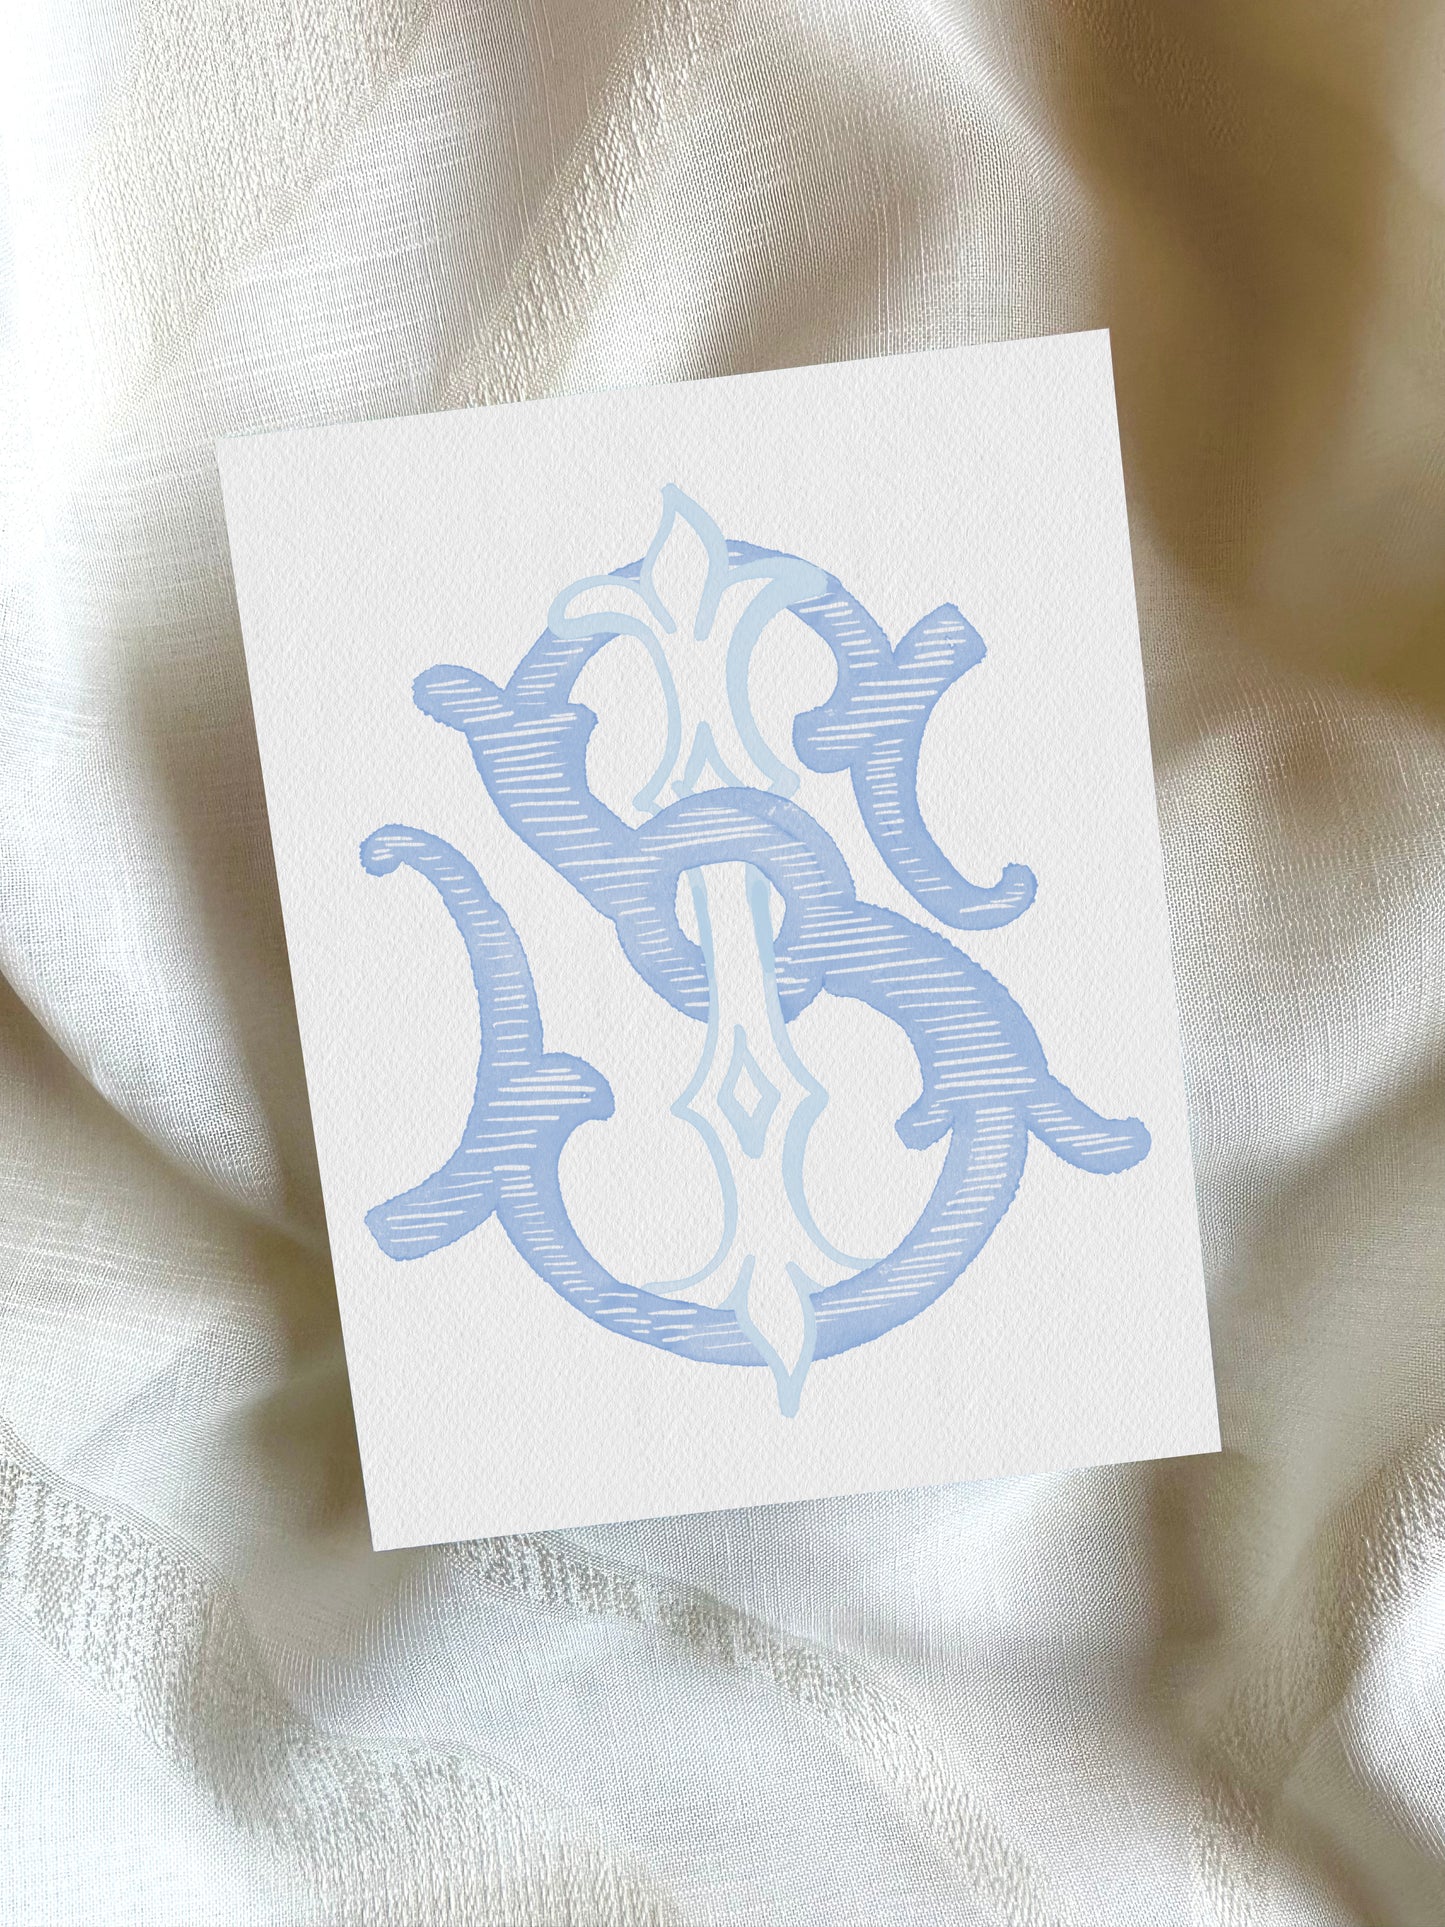 2 Letter Monogram with Letters IS SI | Digital Download - Wedding Monogram SVG, Personal Logo, Wedding Logo for Wedding Invitations The Wedding Crest Lab